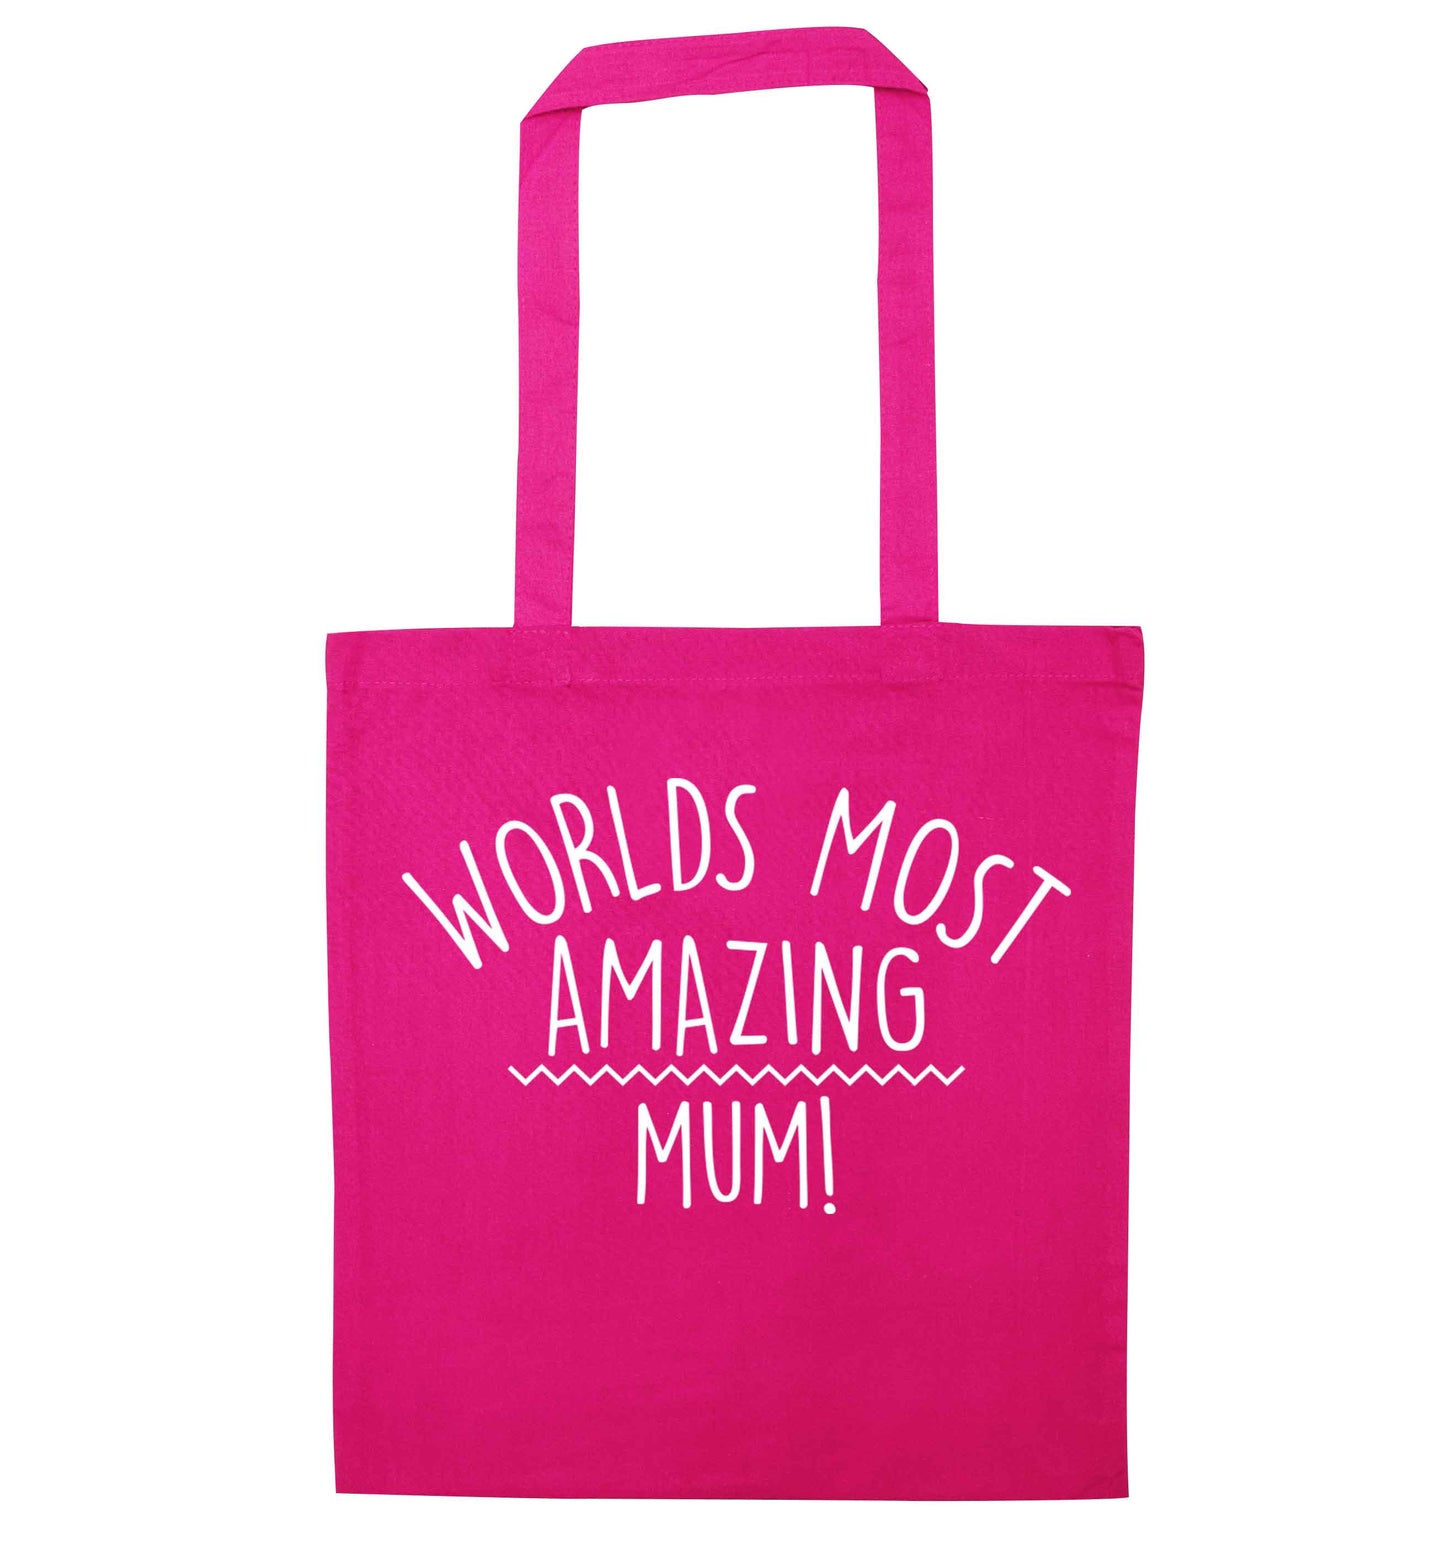 Worlds most amazing mum pink tote bag